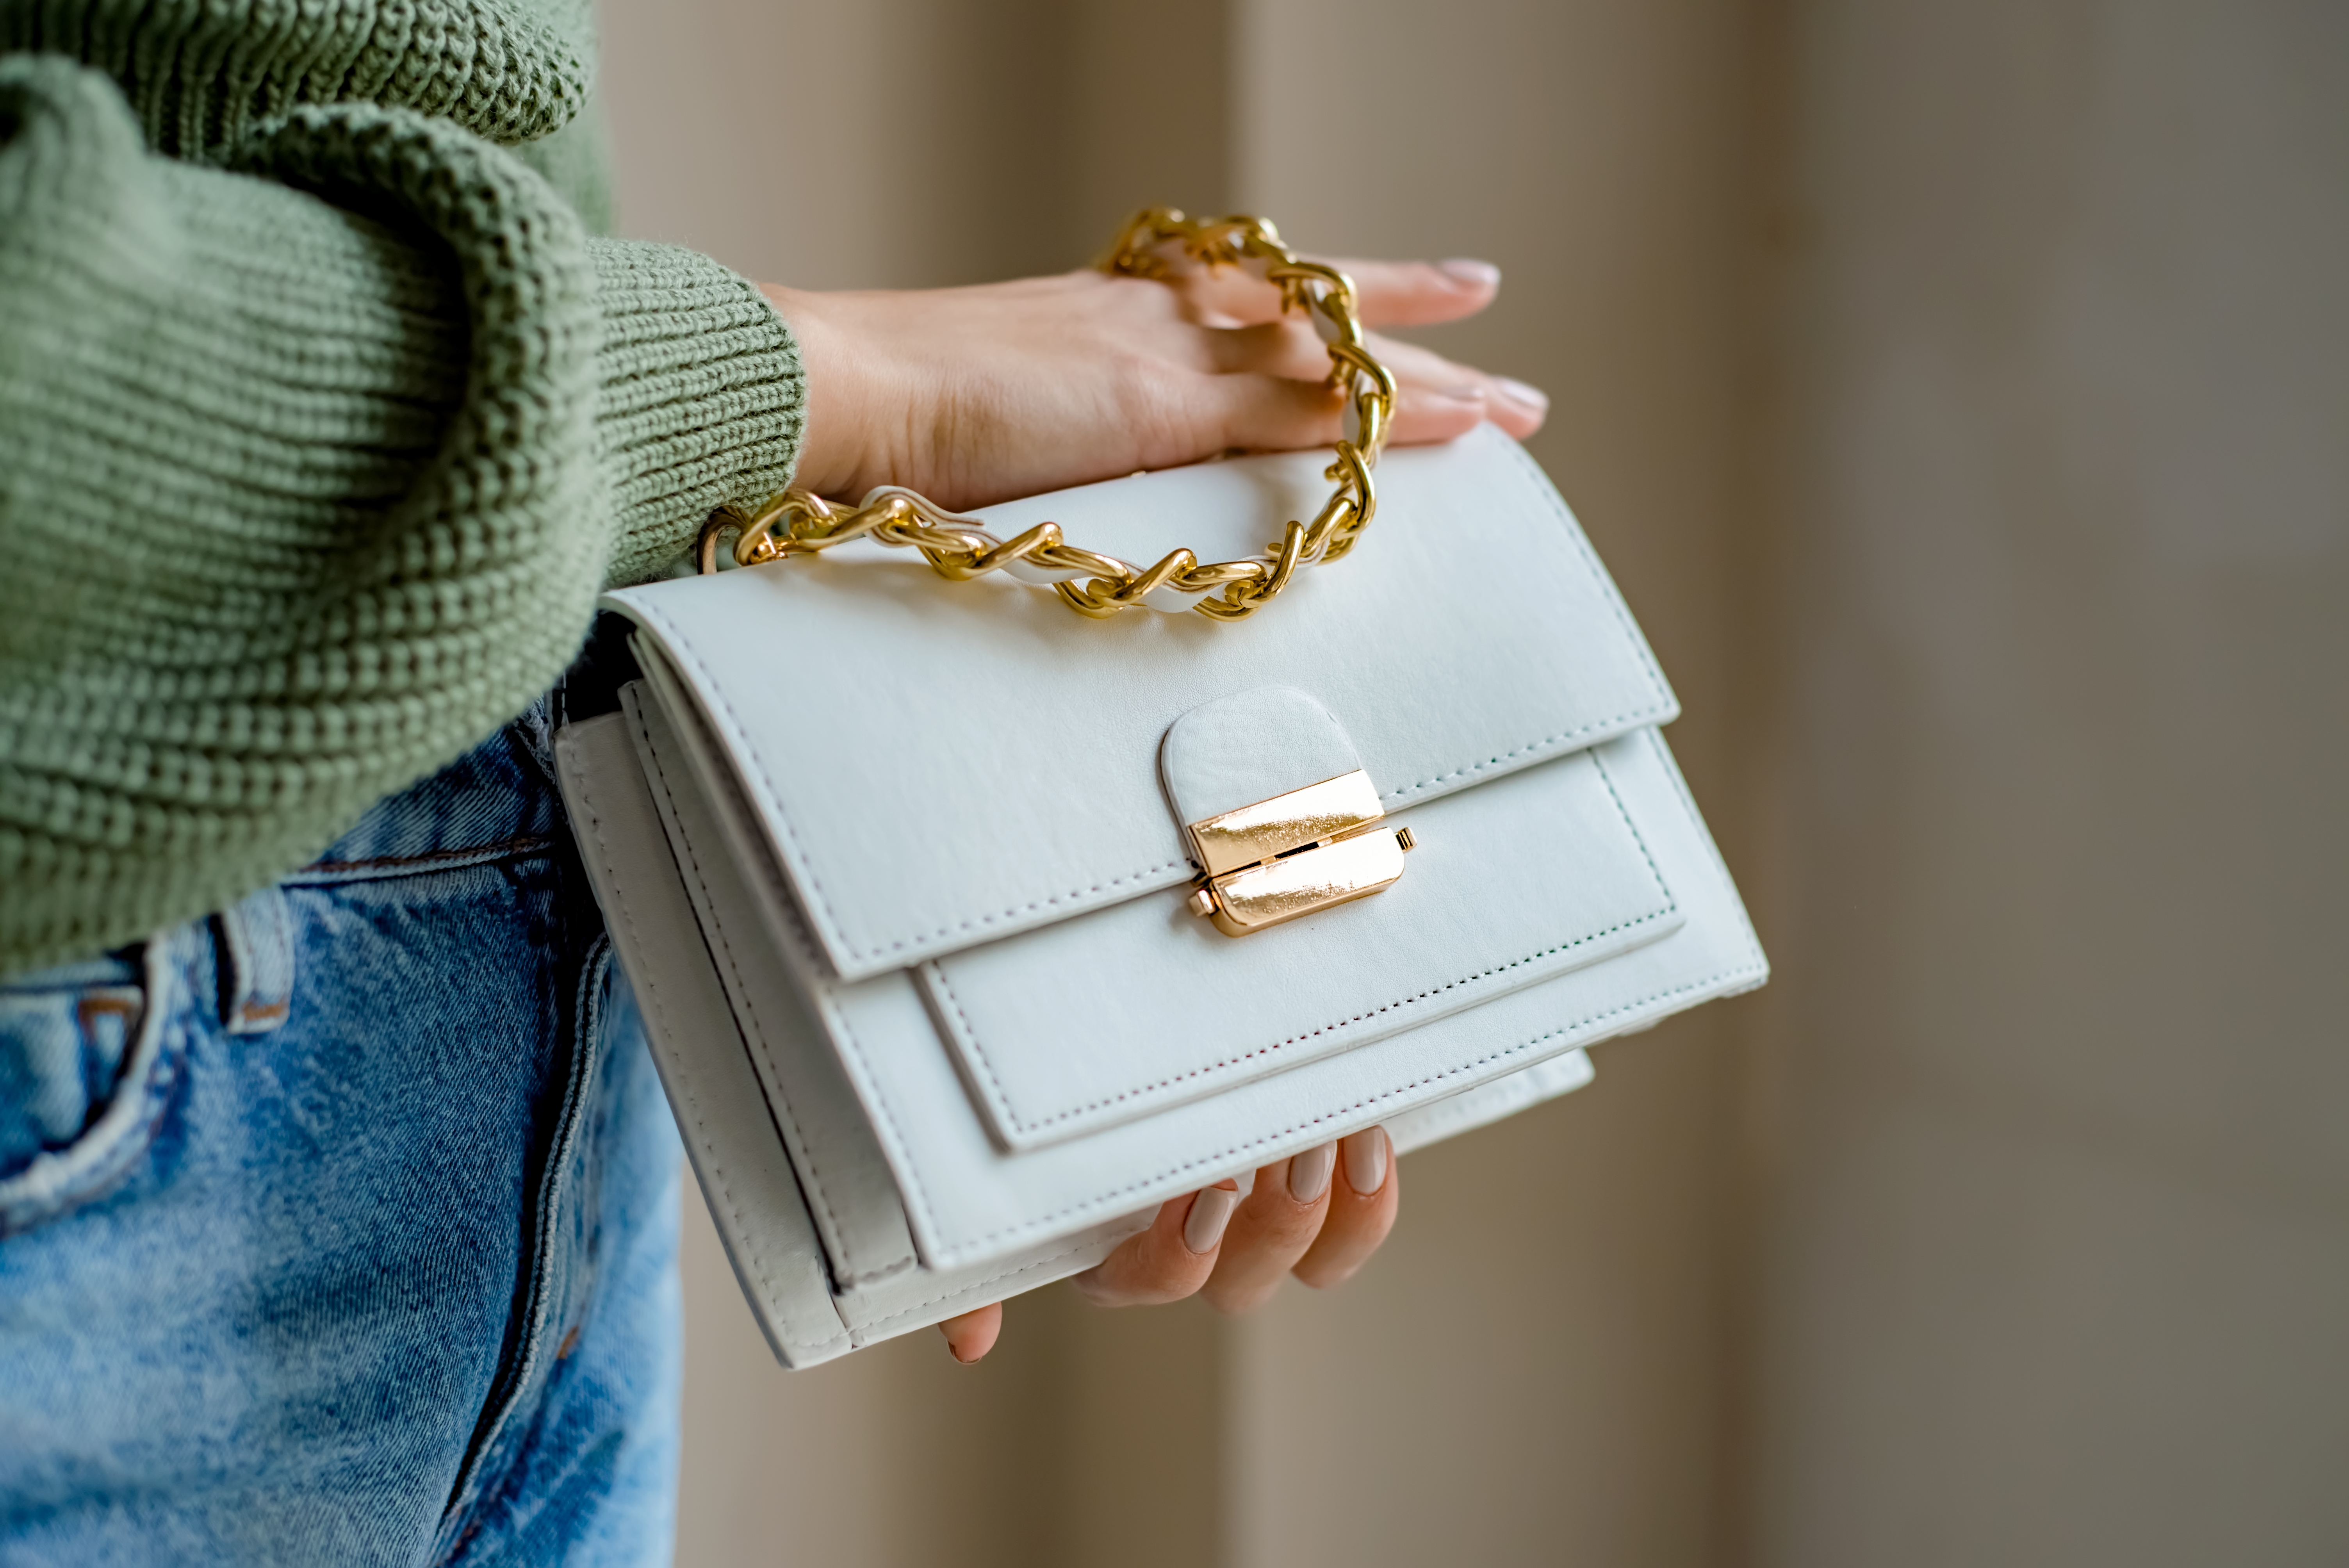 Une femme tenant un sac à main blanc | Source : Shutterstock